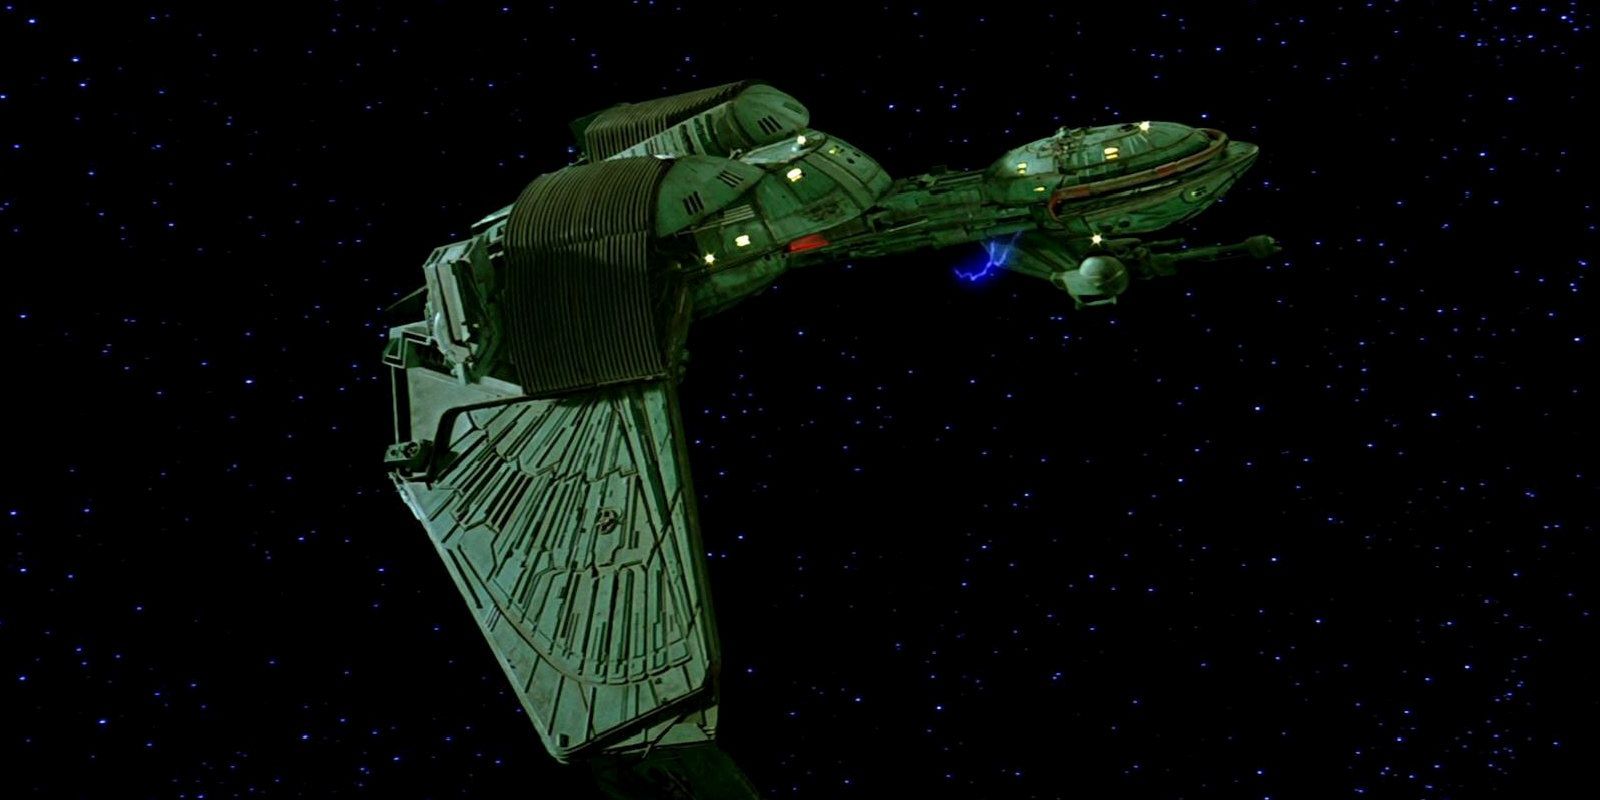 The Klingon ship Bird of Prey from Star Trek